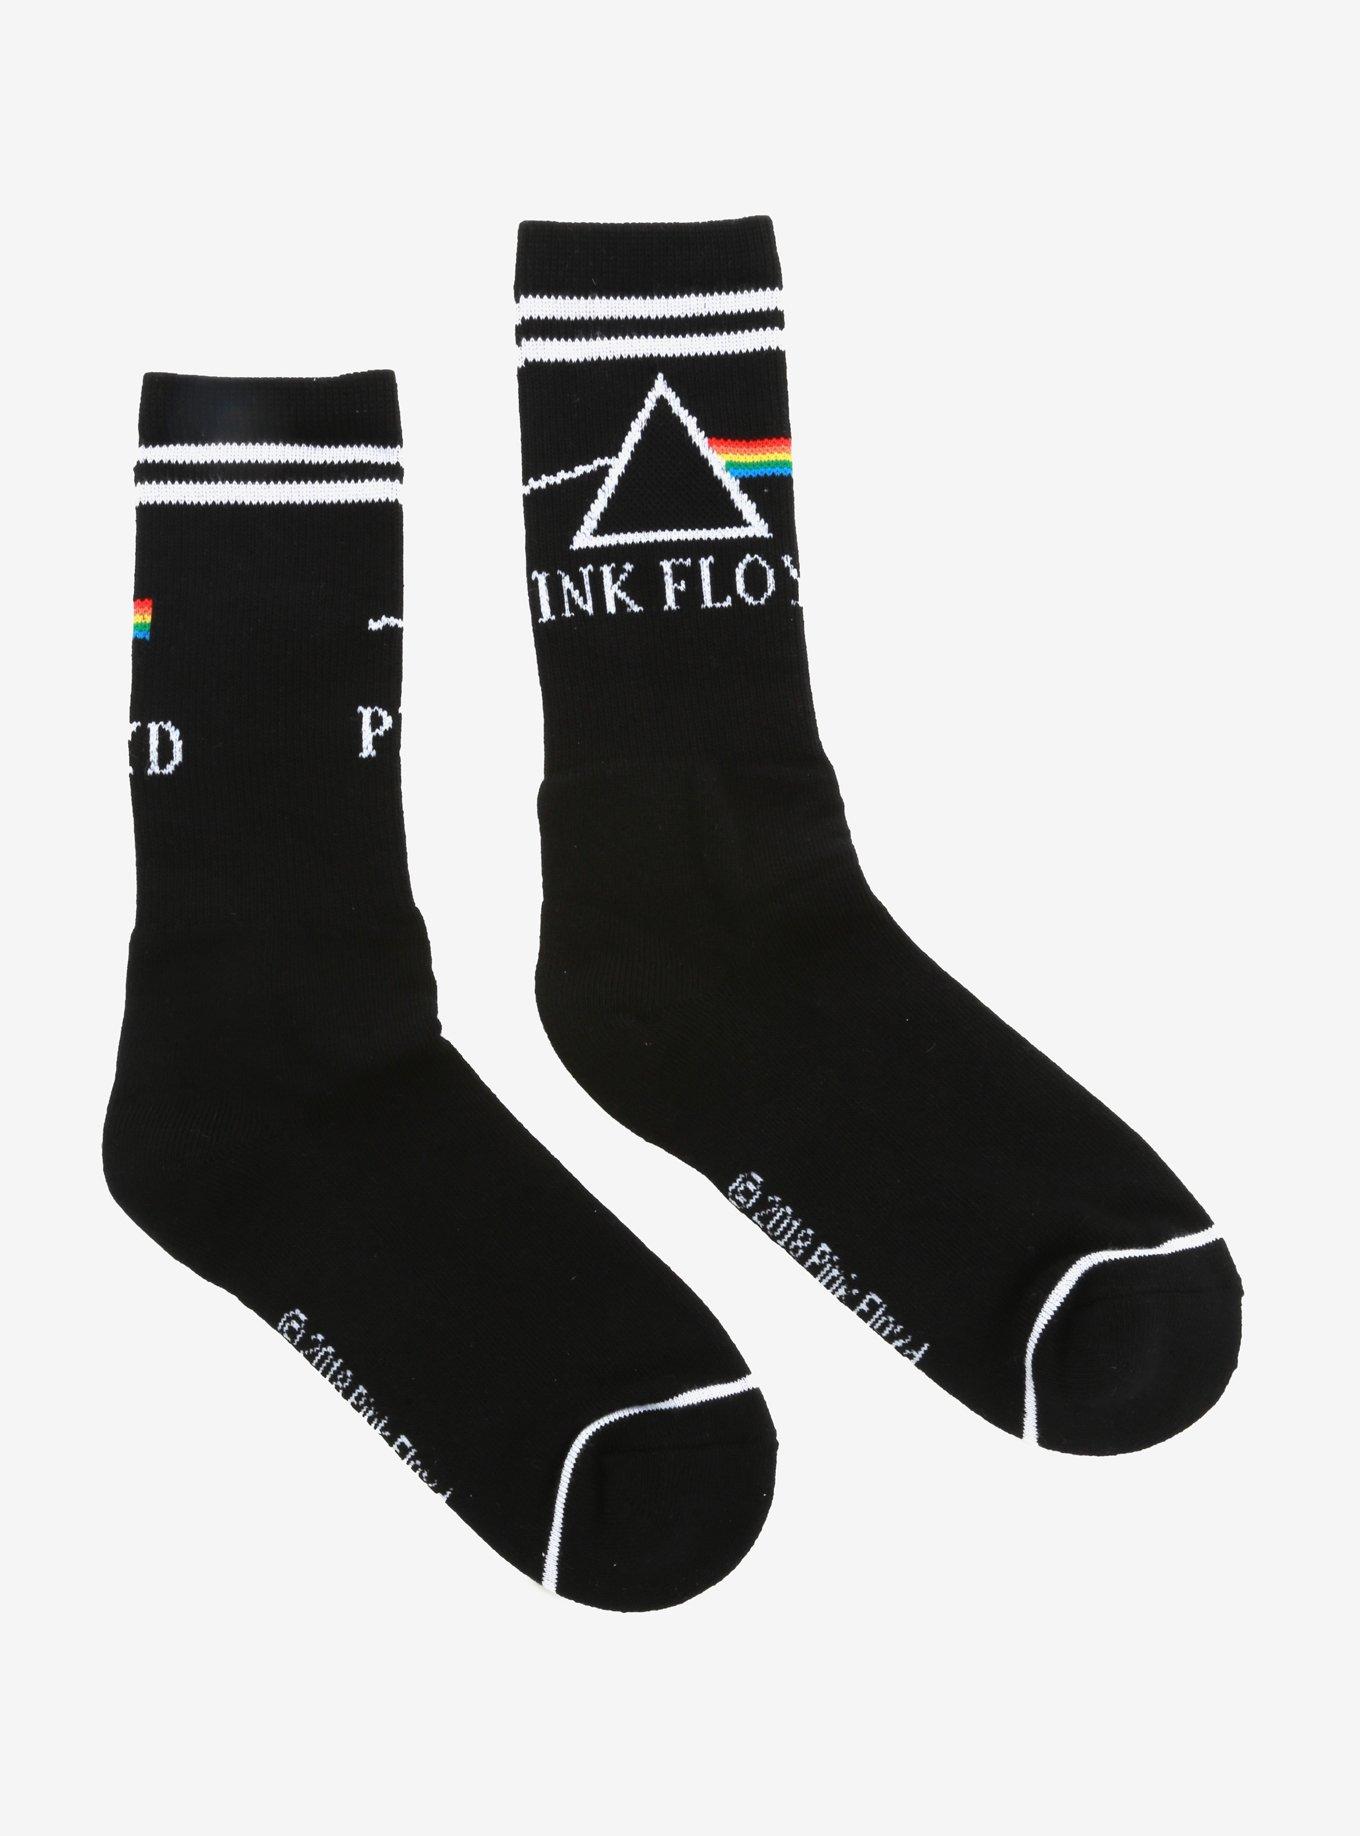 Pink Floyd Dark Side Crew Socks, , alternate